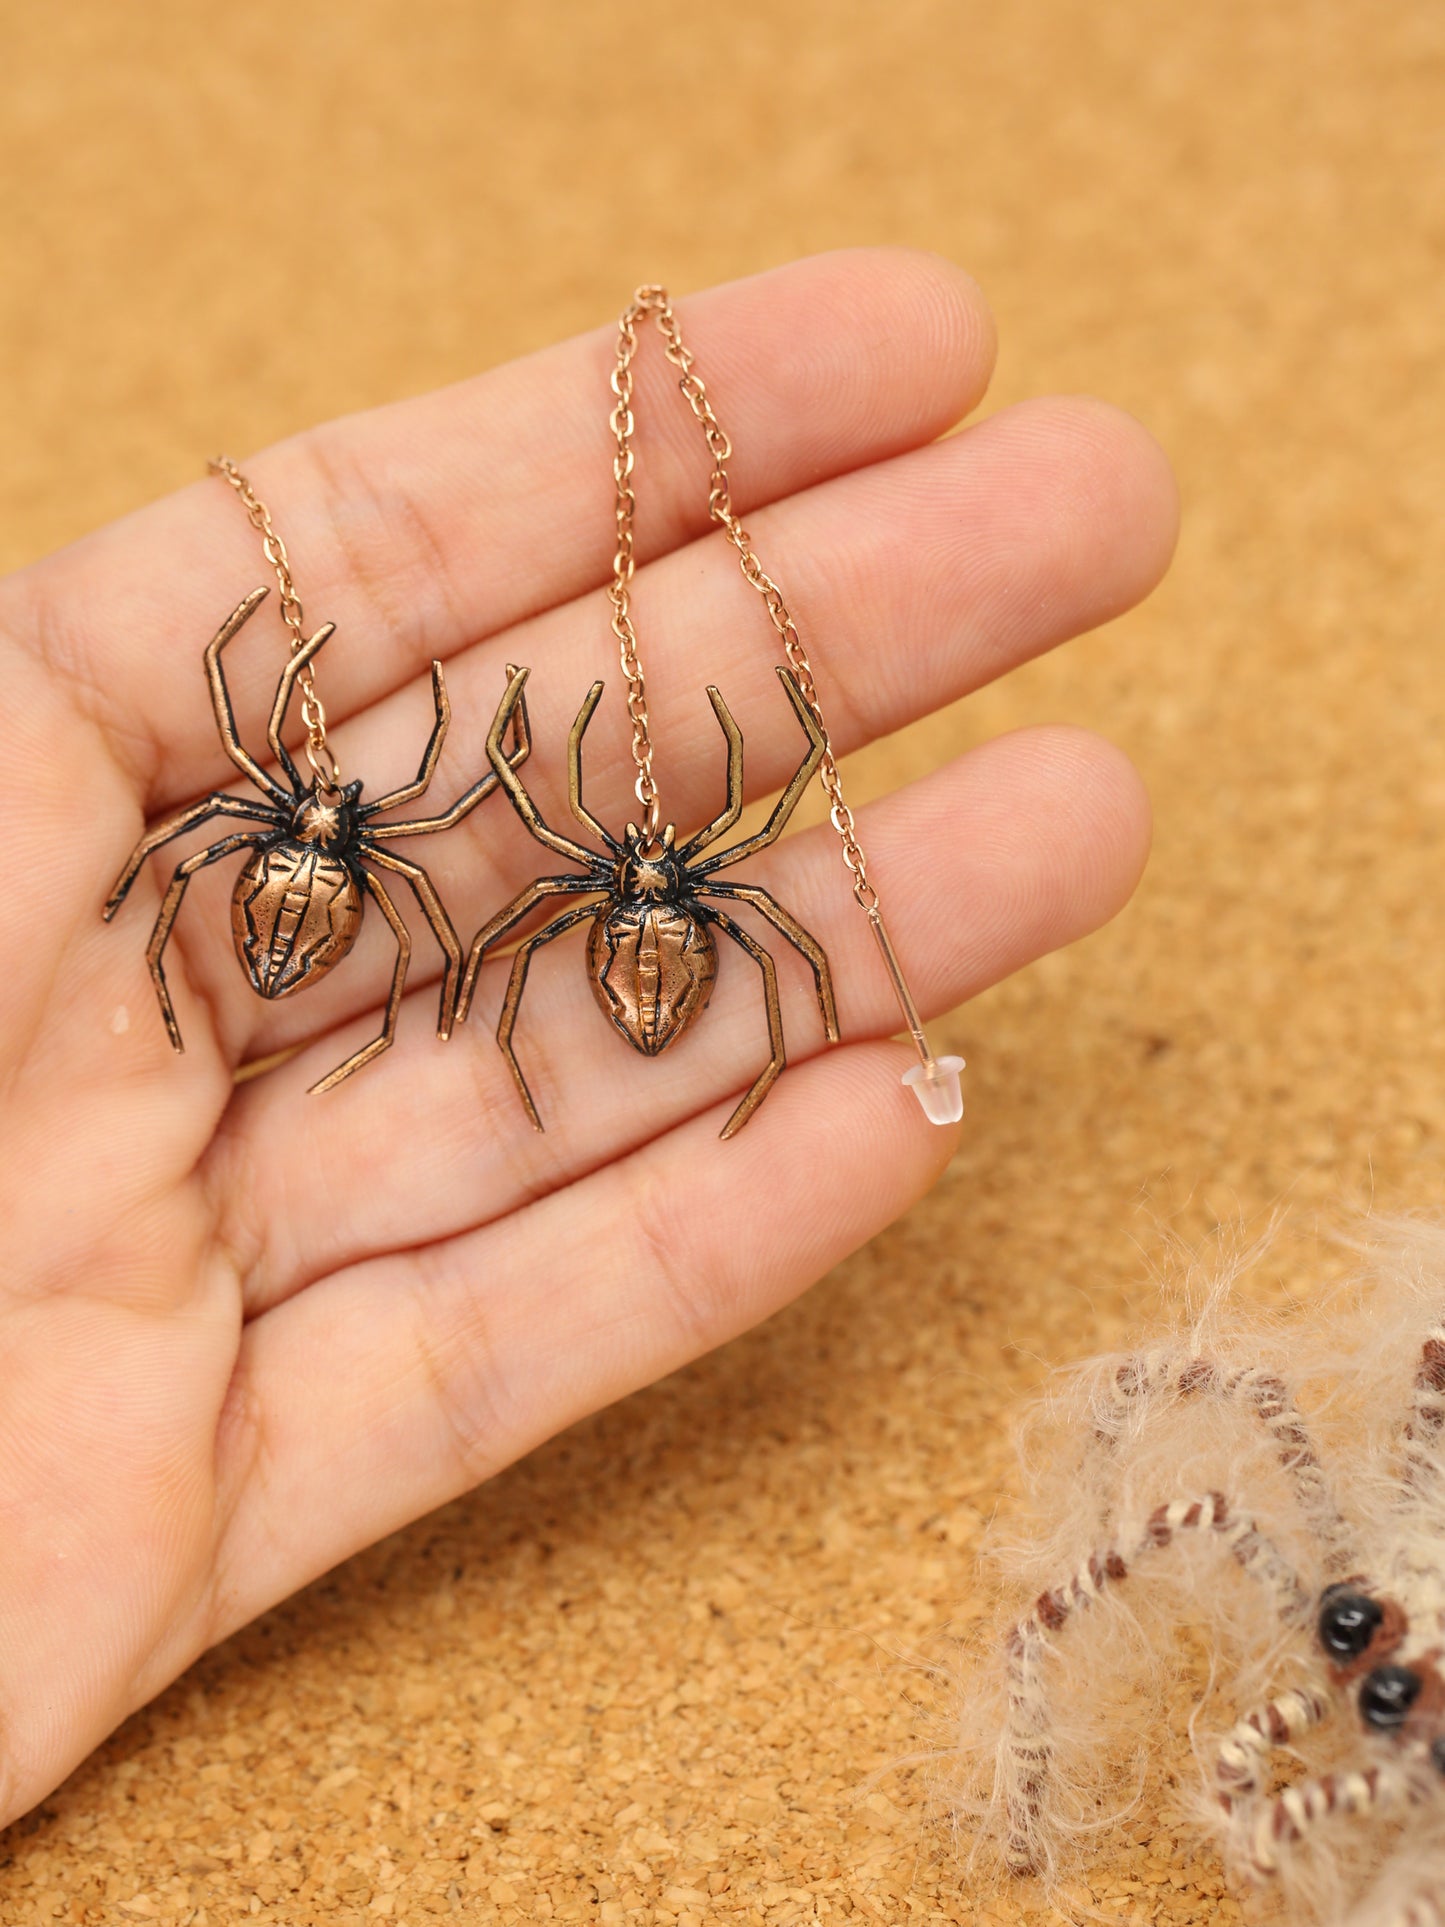 Spider earrings on a thread